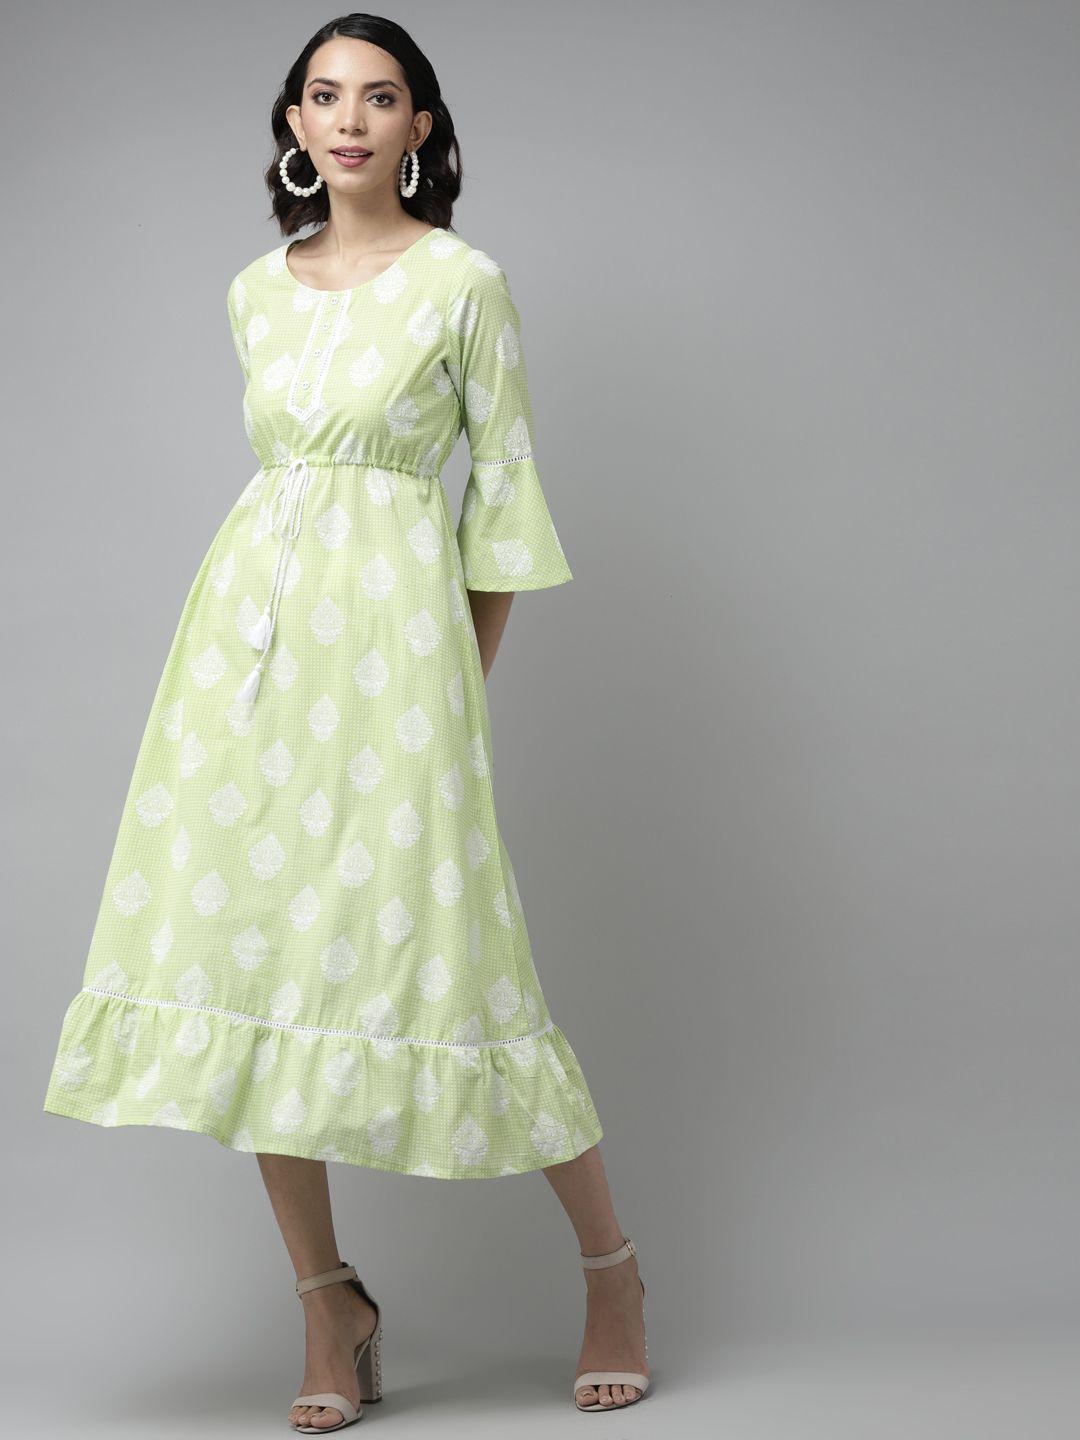 amirah-s-green-&-white-ethnic-motifs-ethnic-a-line-midi-dress